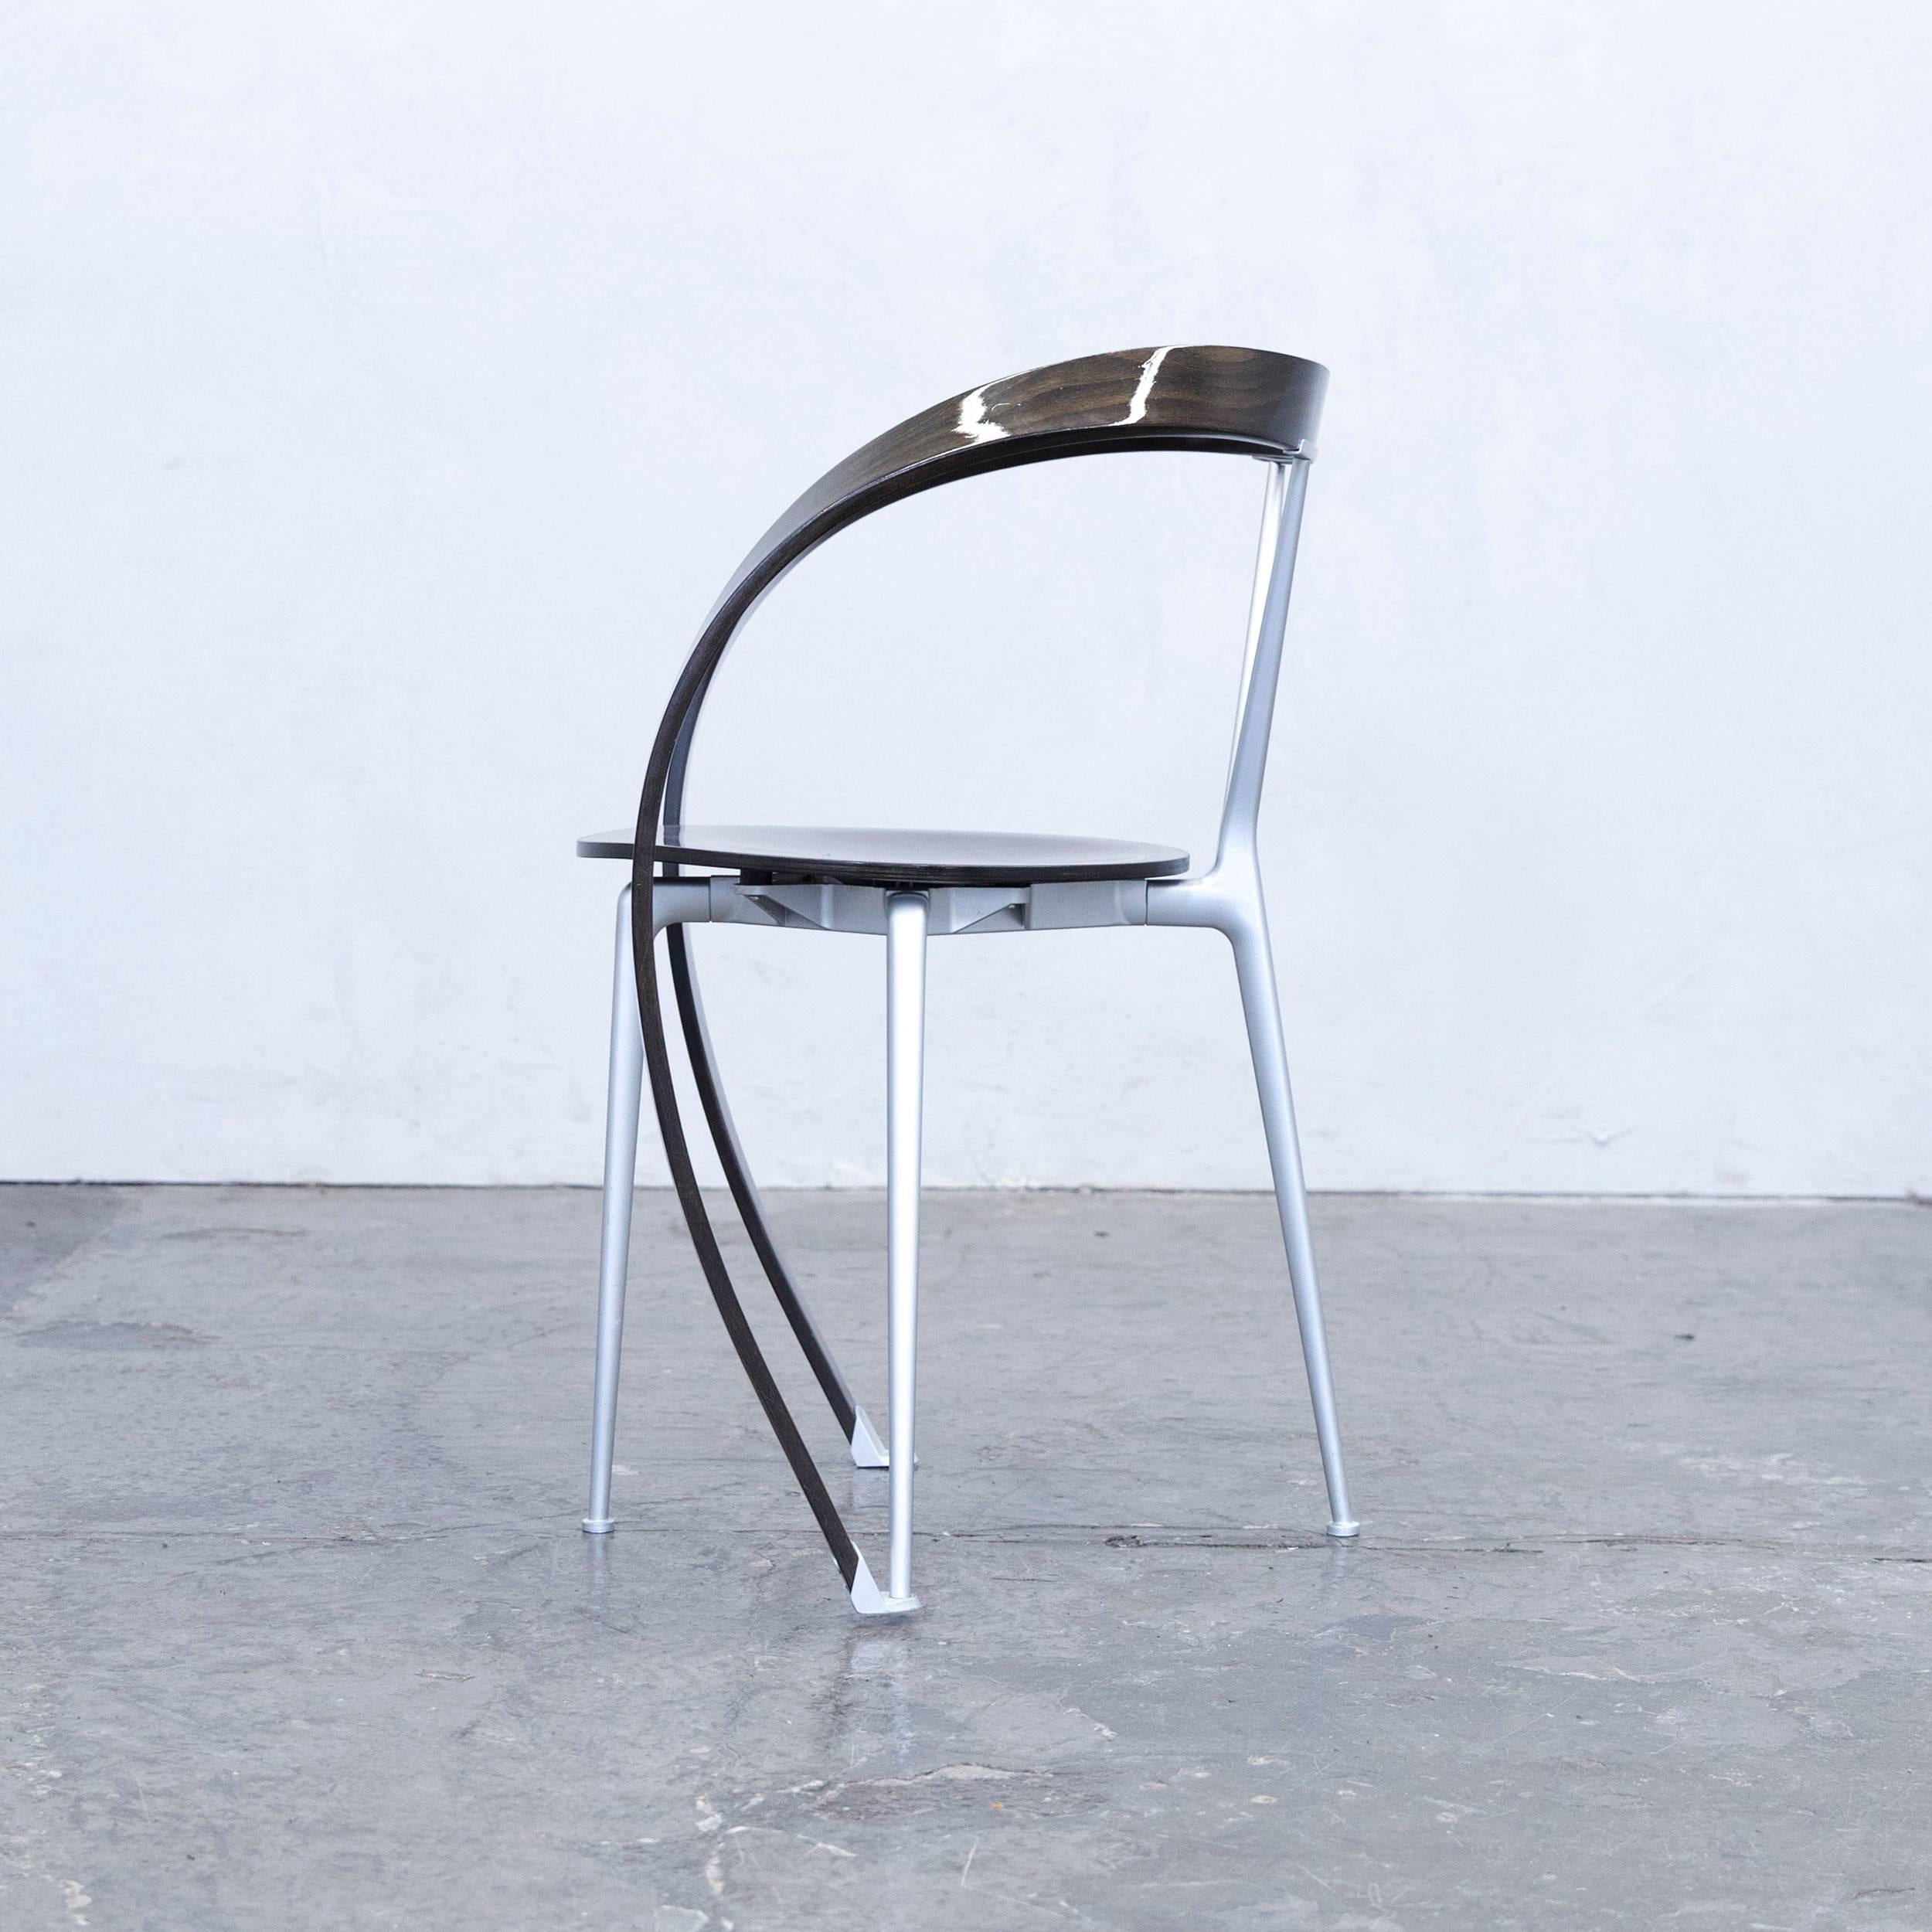 Cassina Revers Andrea Branzi Designer Chair Wood Brown Metal One Seat Modern 2